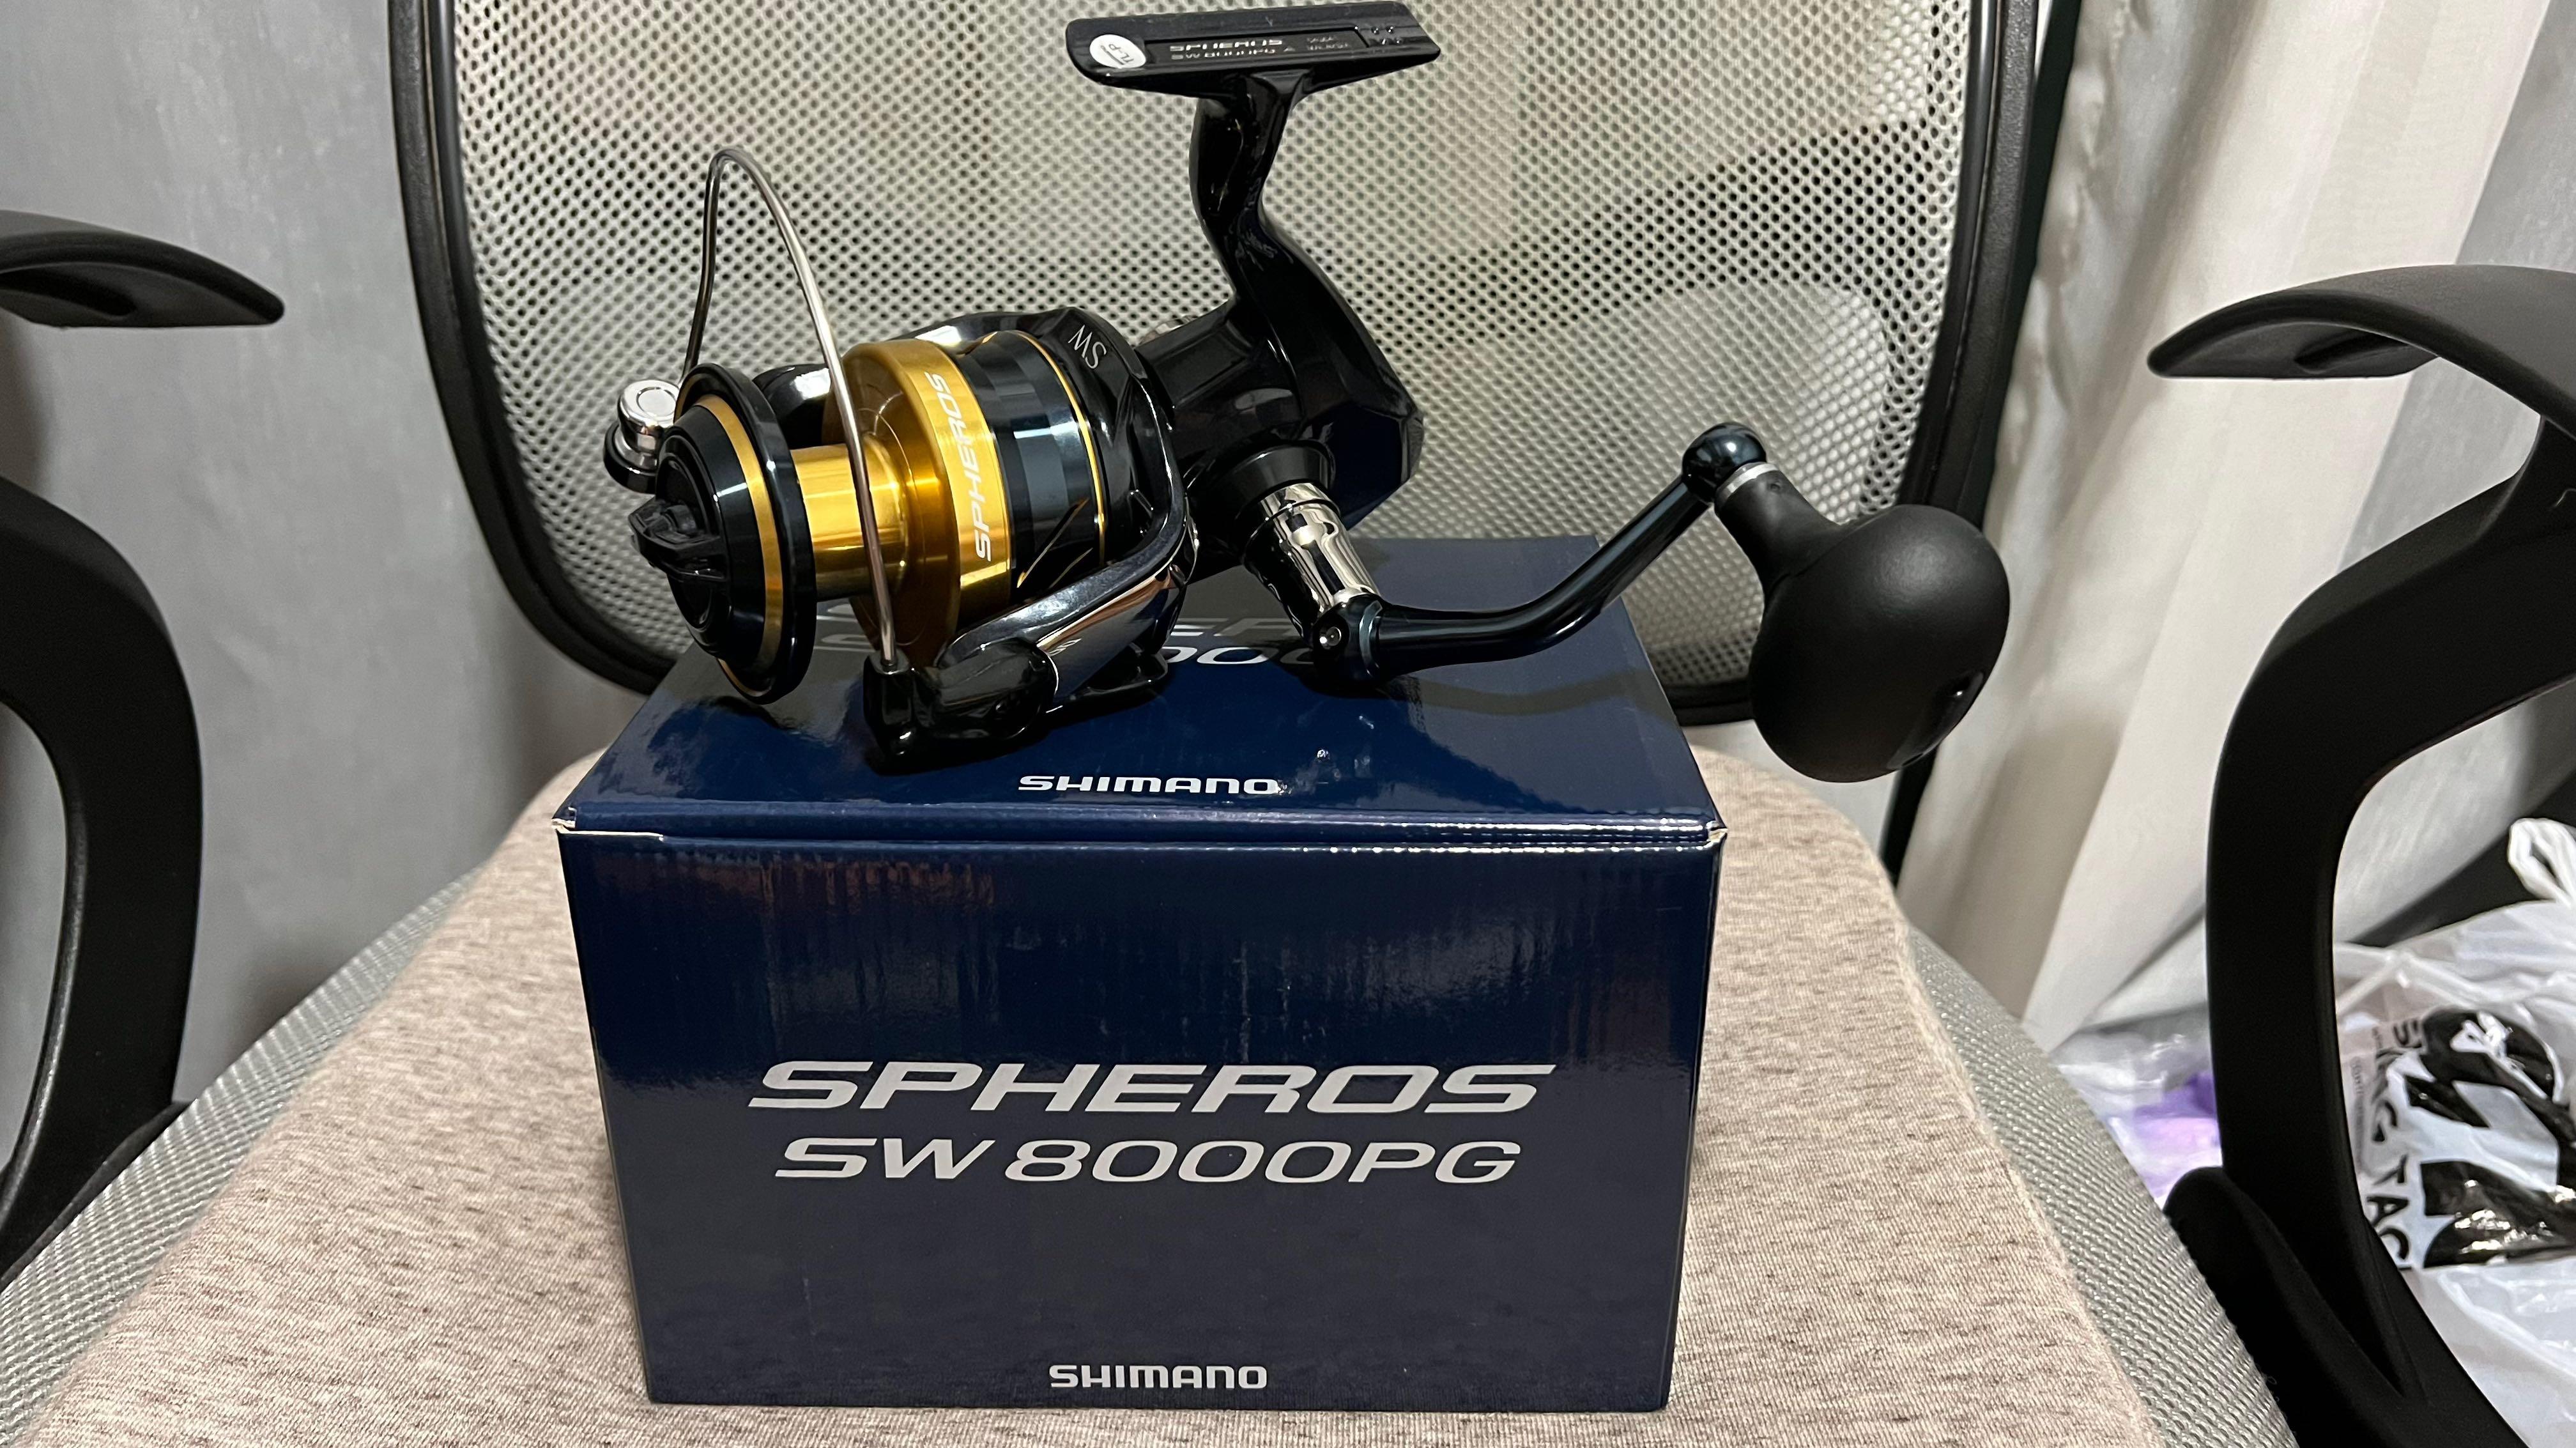 [BNIB] CHEAPEST Shimano Spheros 2021 SW8000PG Spinning Reel